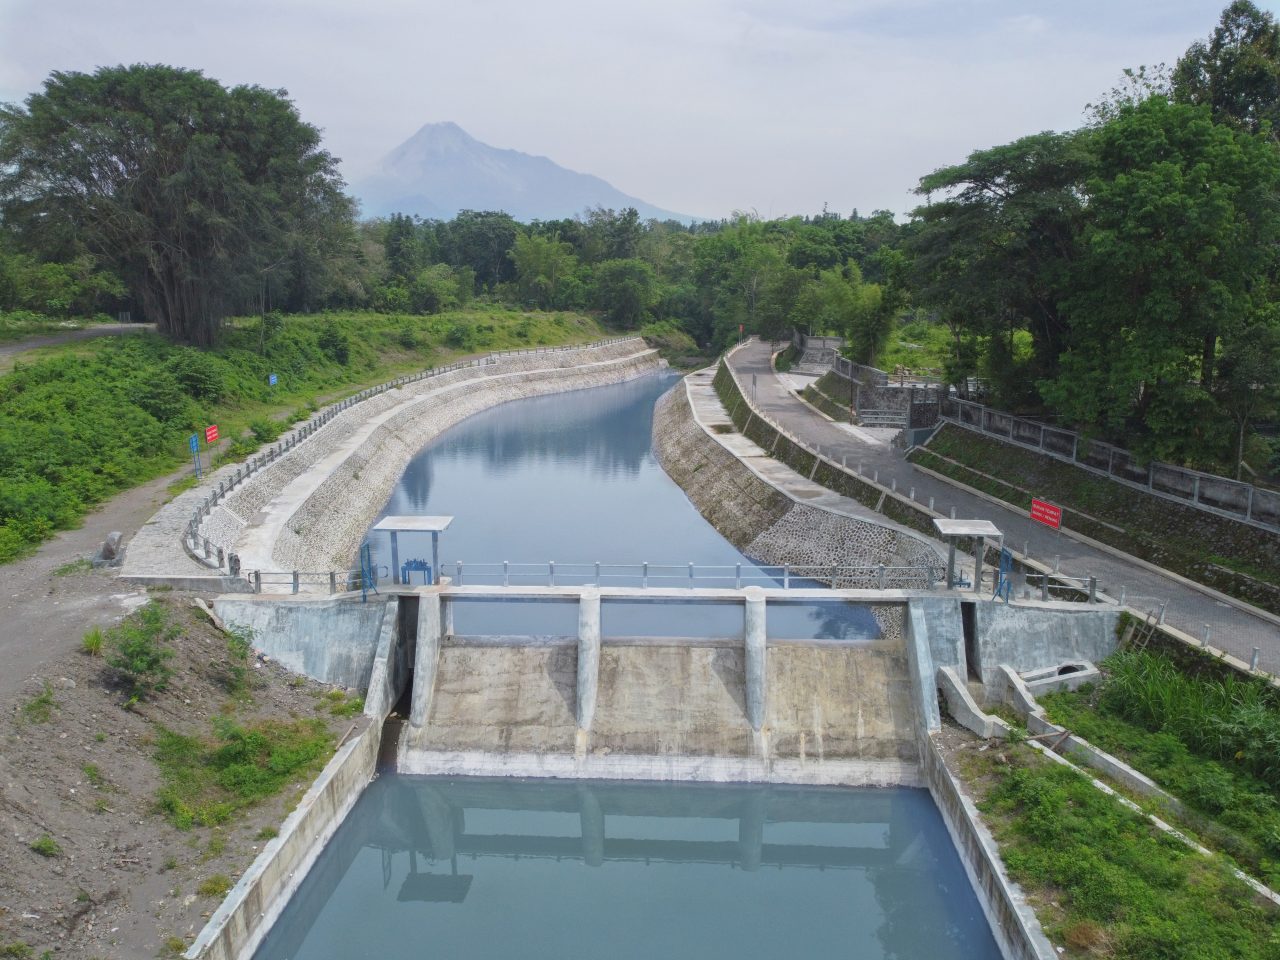 UII bersama pemerintah melalui Balai Besar Wilayah Sungai Serayu Opak (BBWSSO) mulai melaksanakan program konservasi air berupa pembangunan dua embung (reservoir) di area Kampus Terpadu UII.